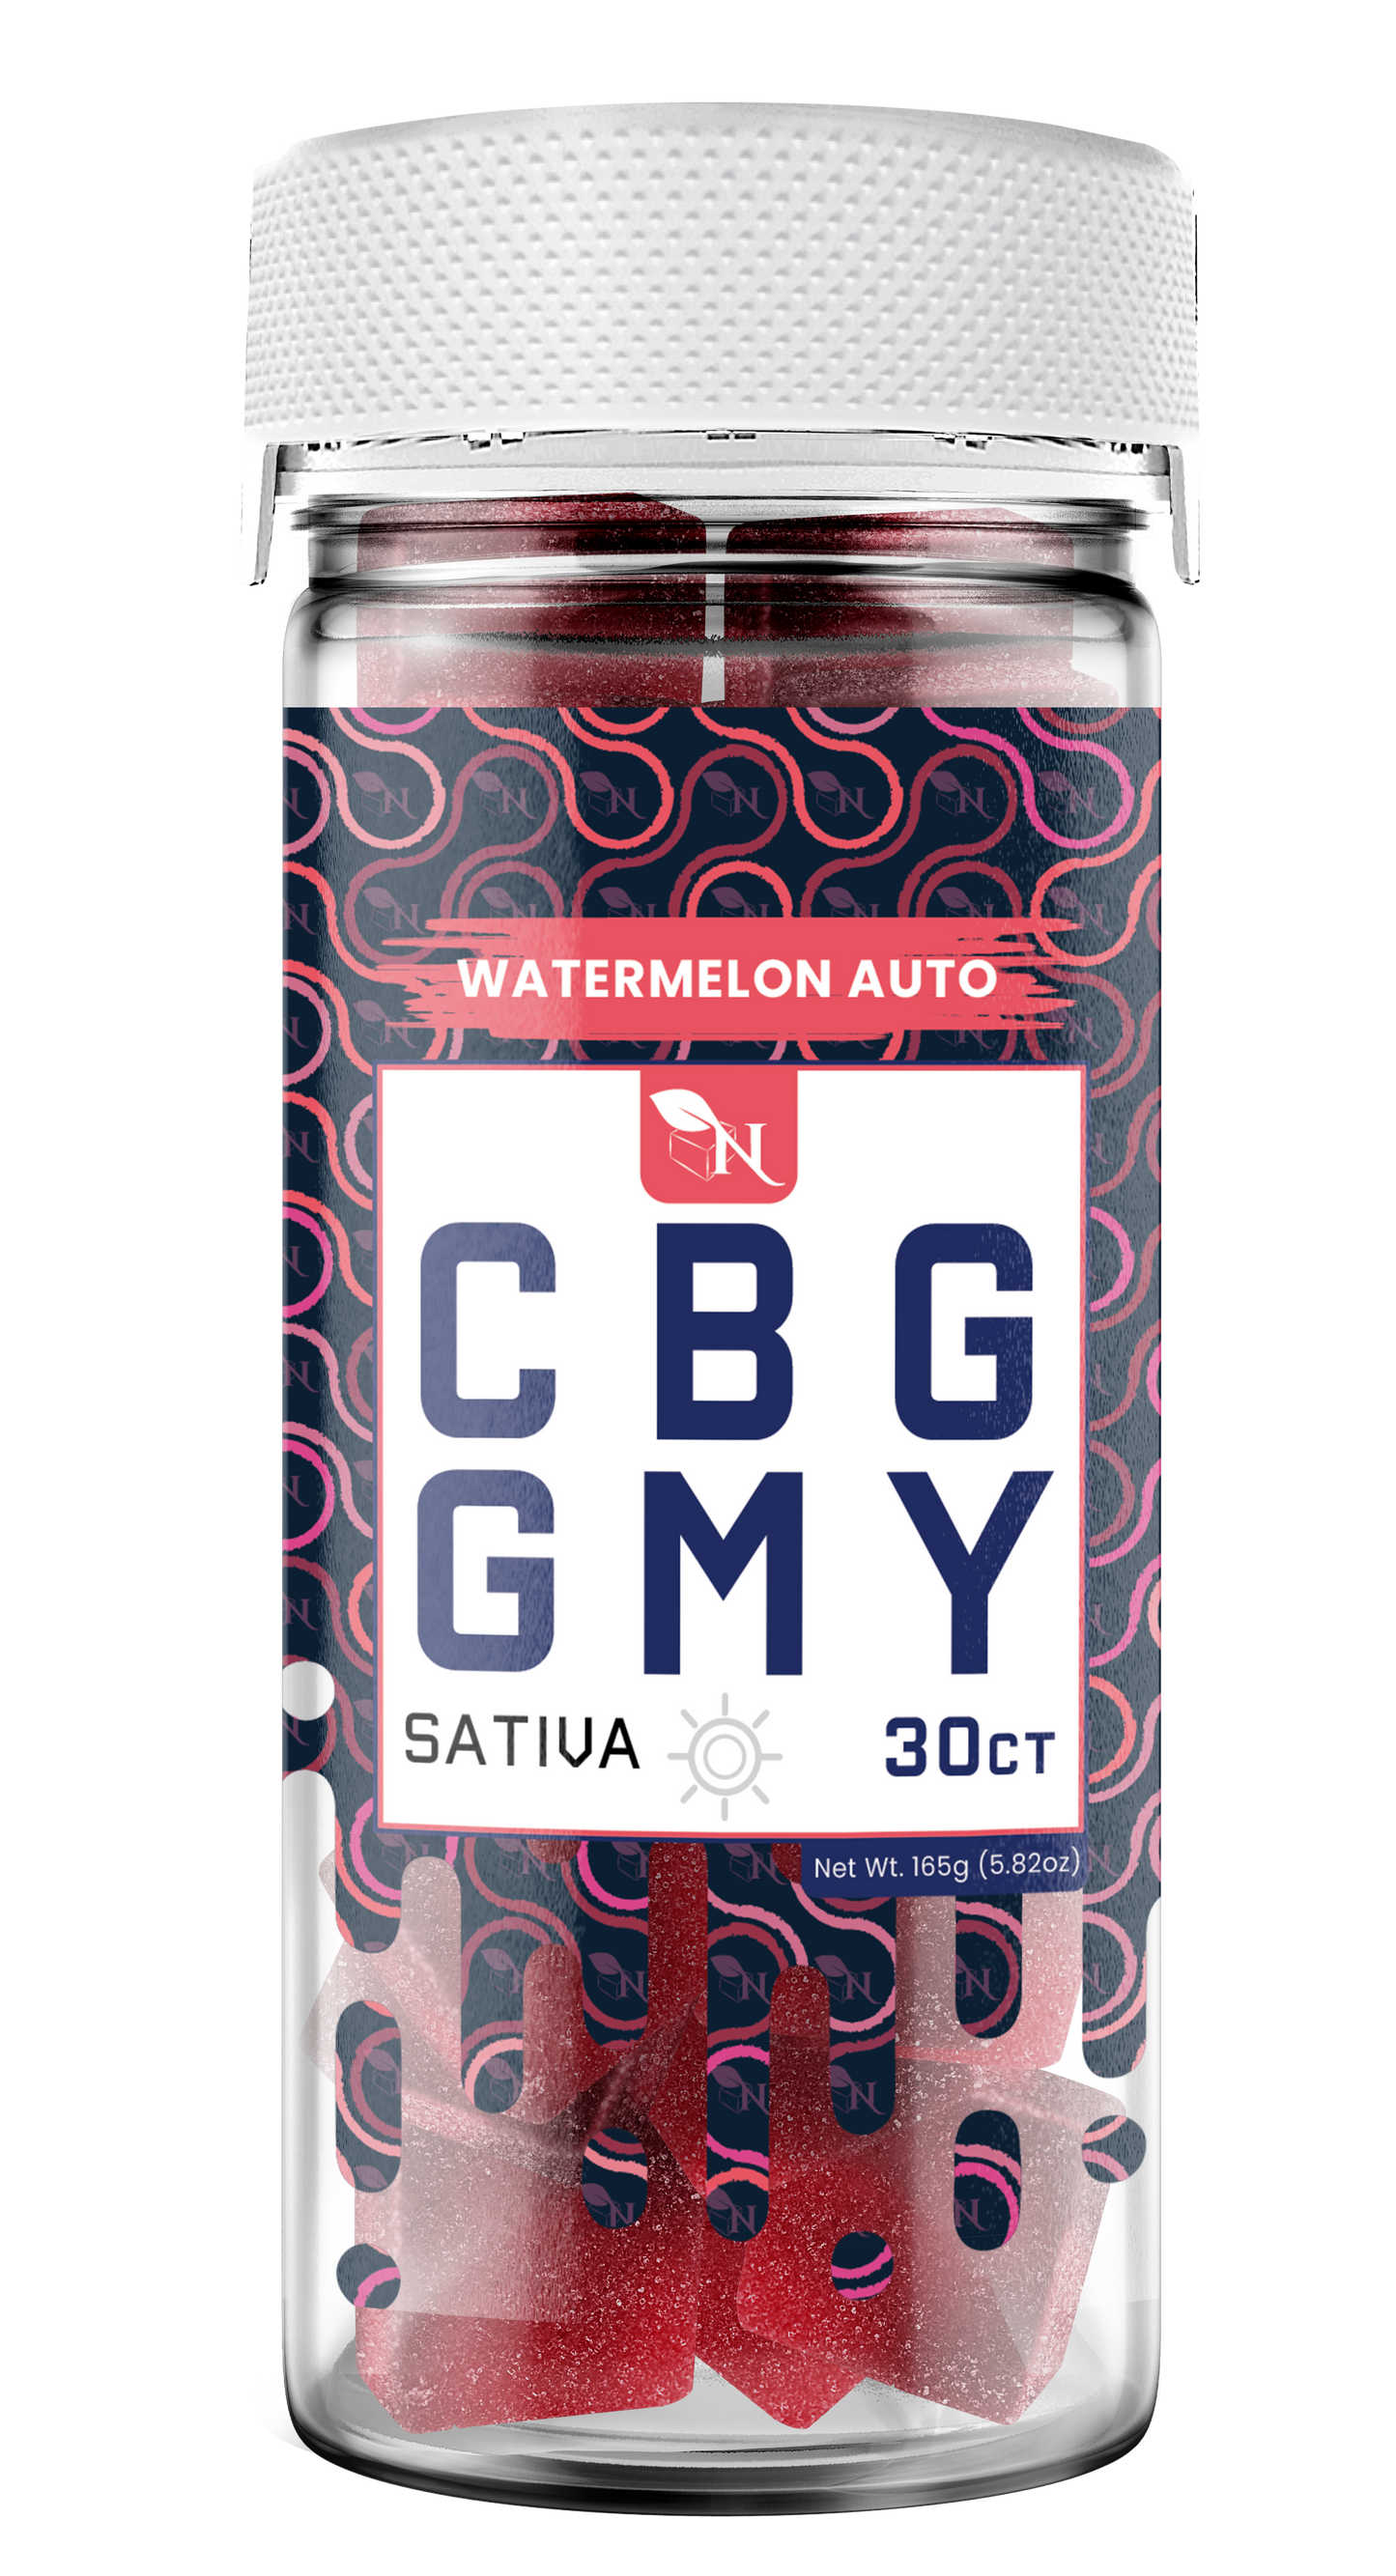 AGFN CBG GMY CBG SATIVA Gummies I 1500MG/30ct/Jar